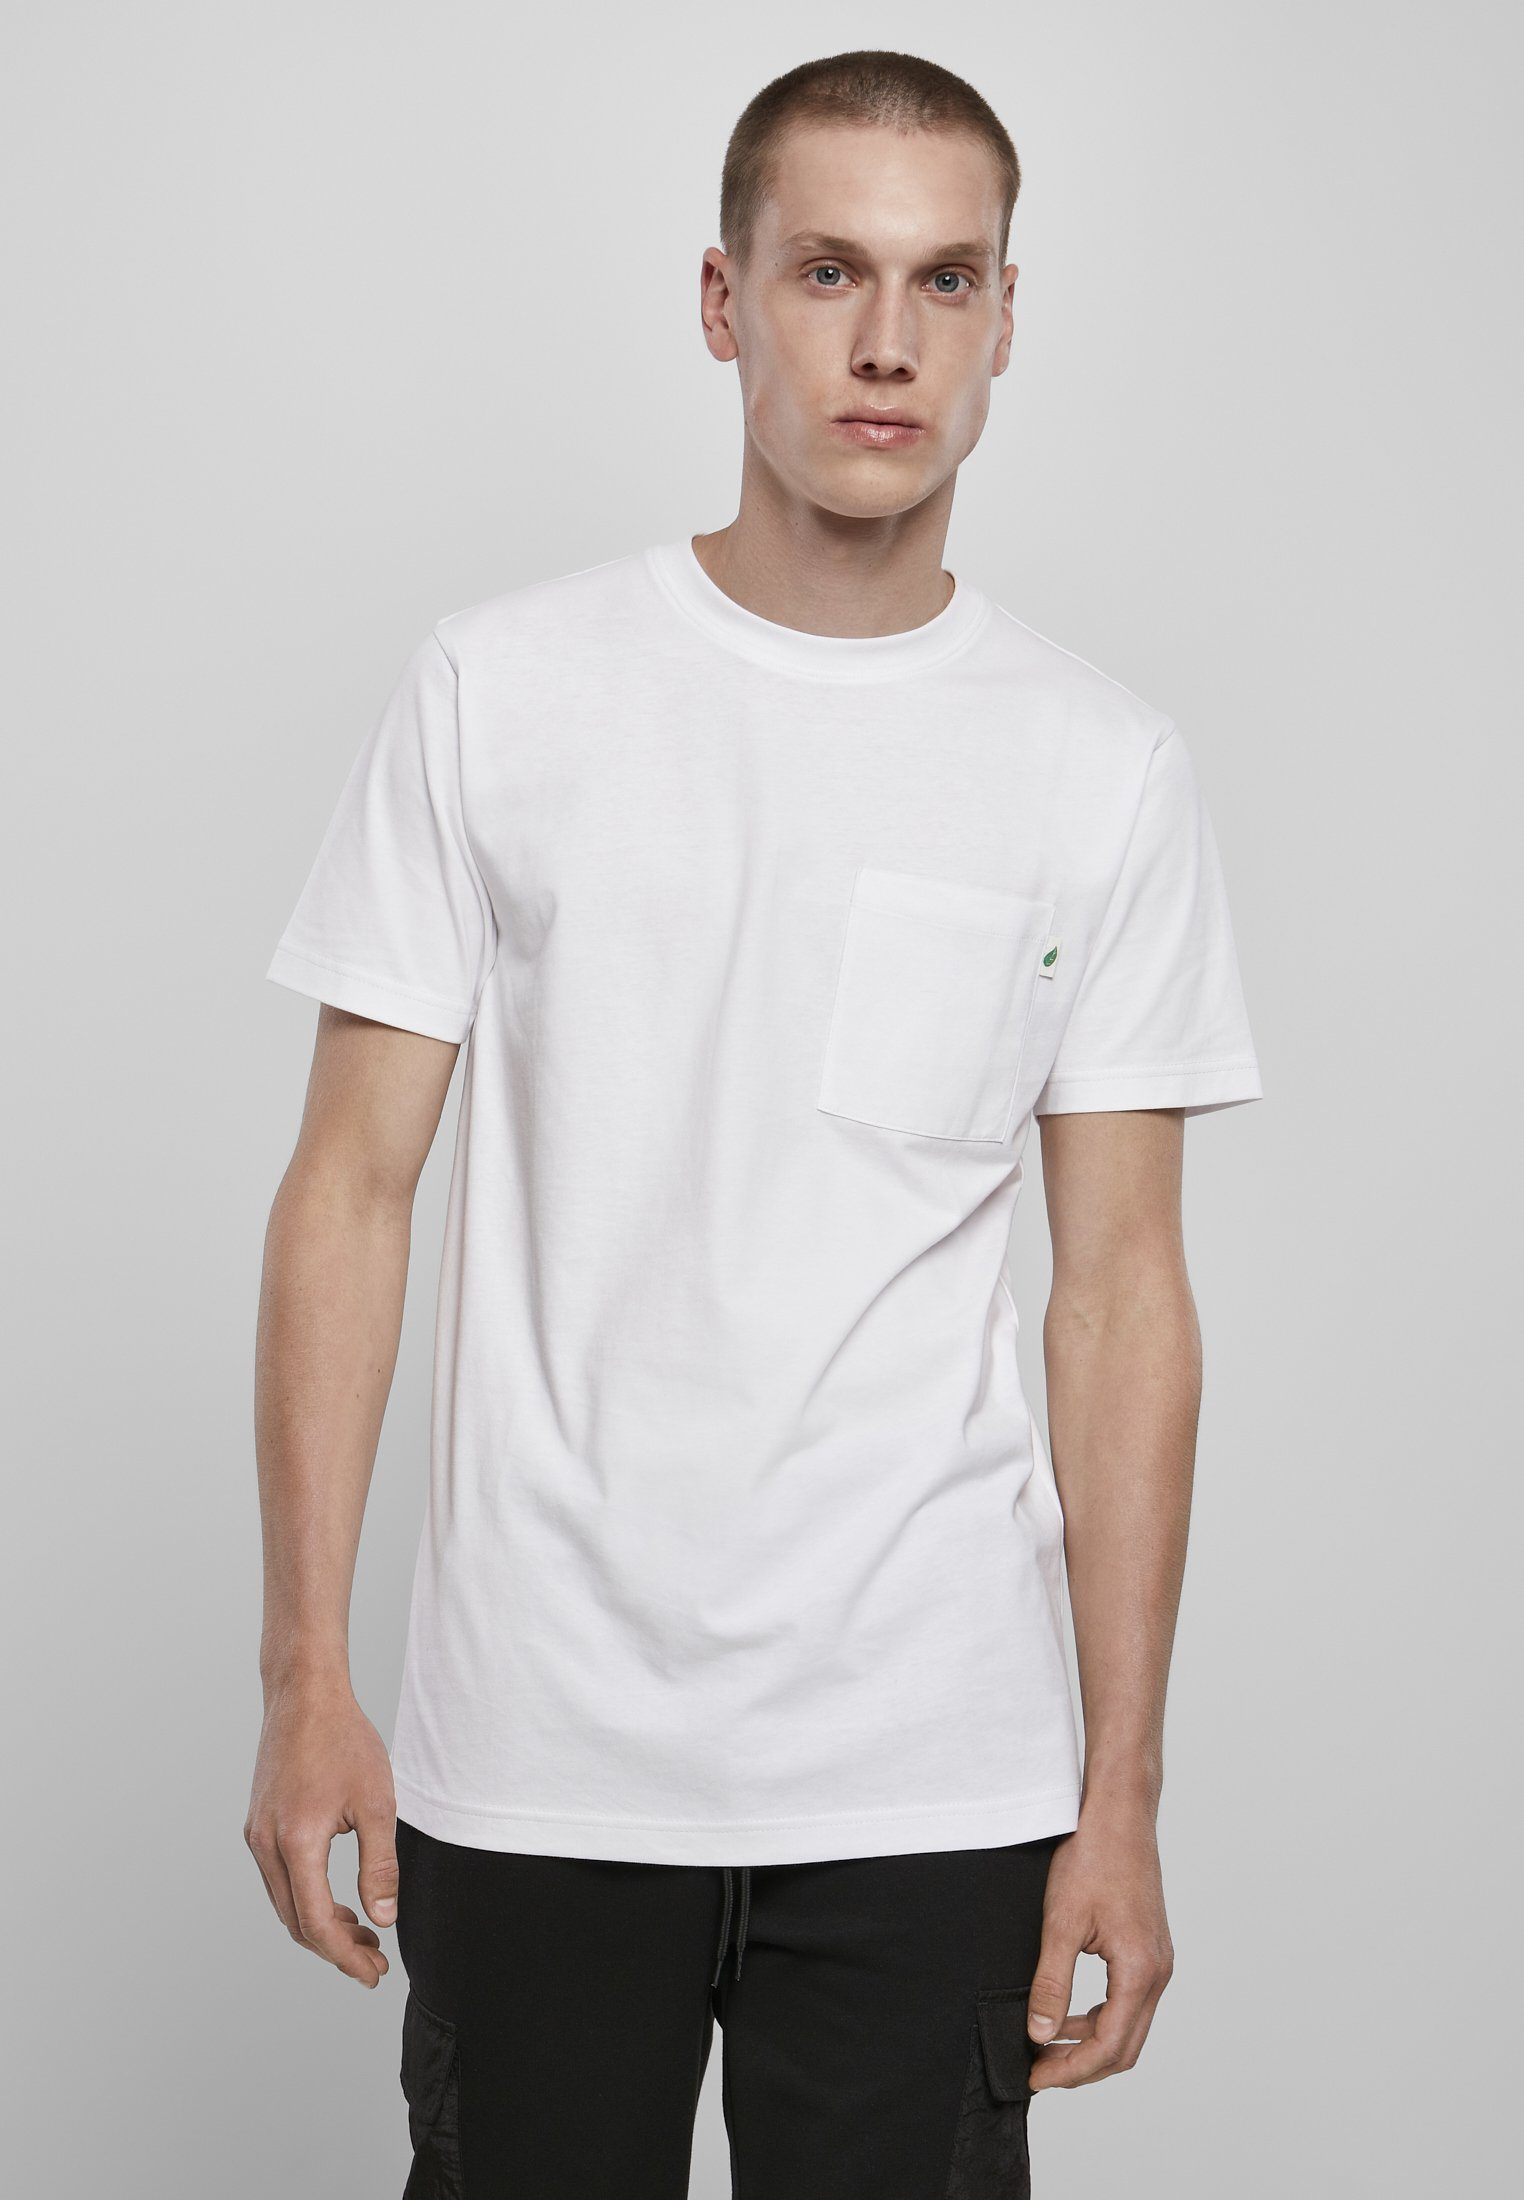 CLASSICS Pocket Herren Basic URBAN (1-tlg) T-Shirt white Tee Cotton Organic